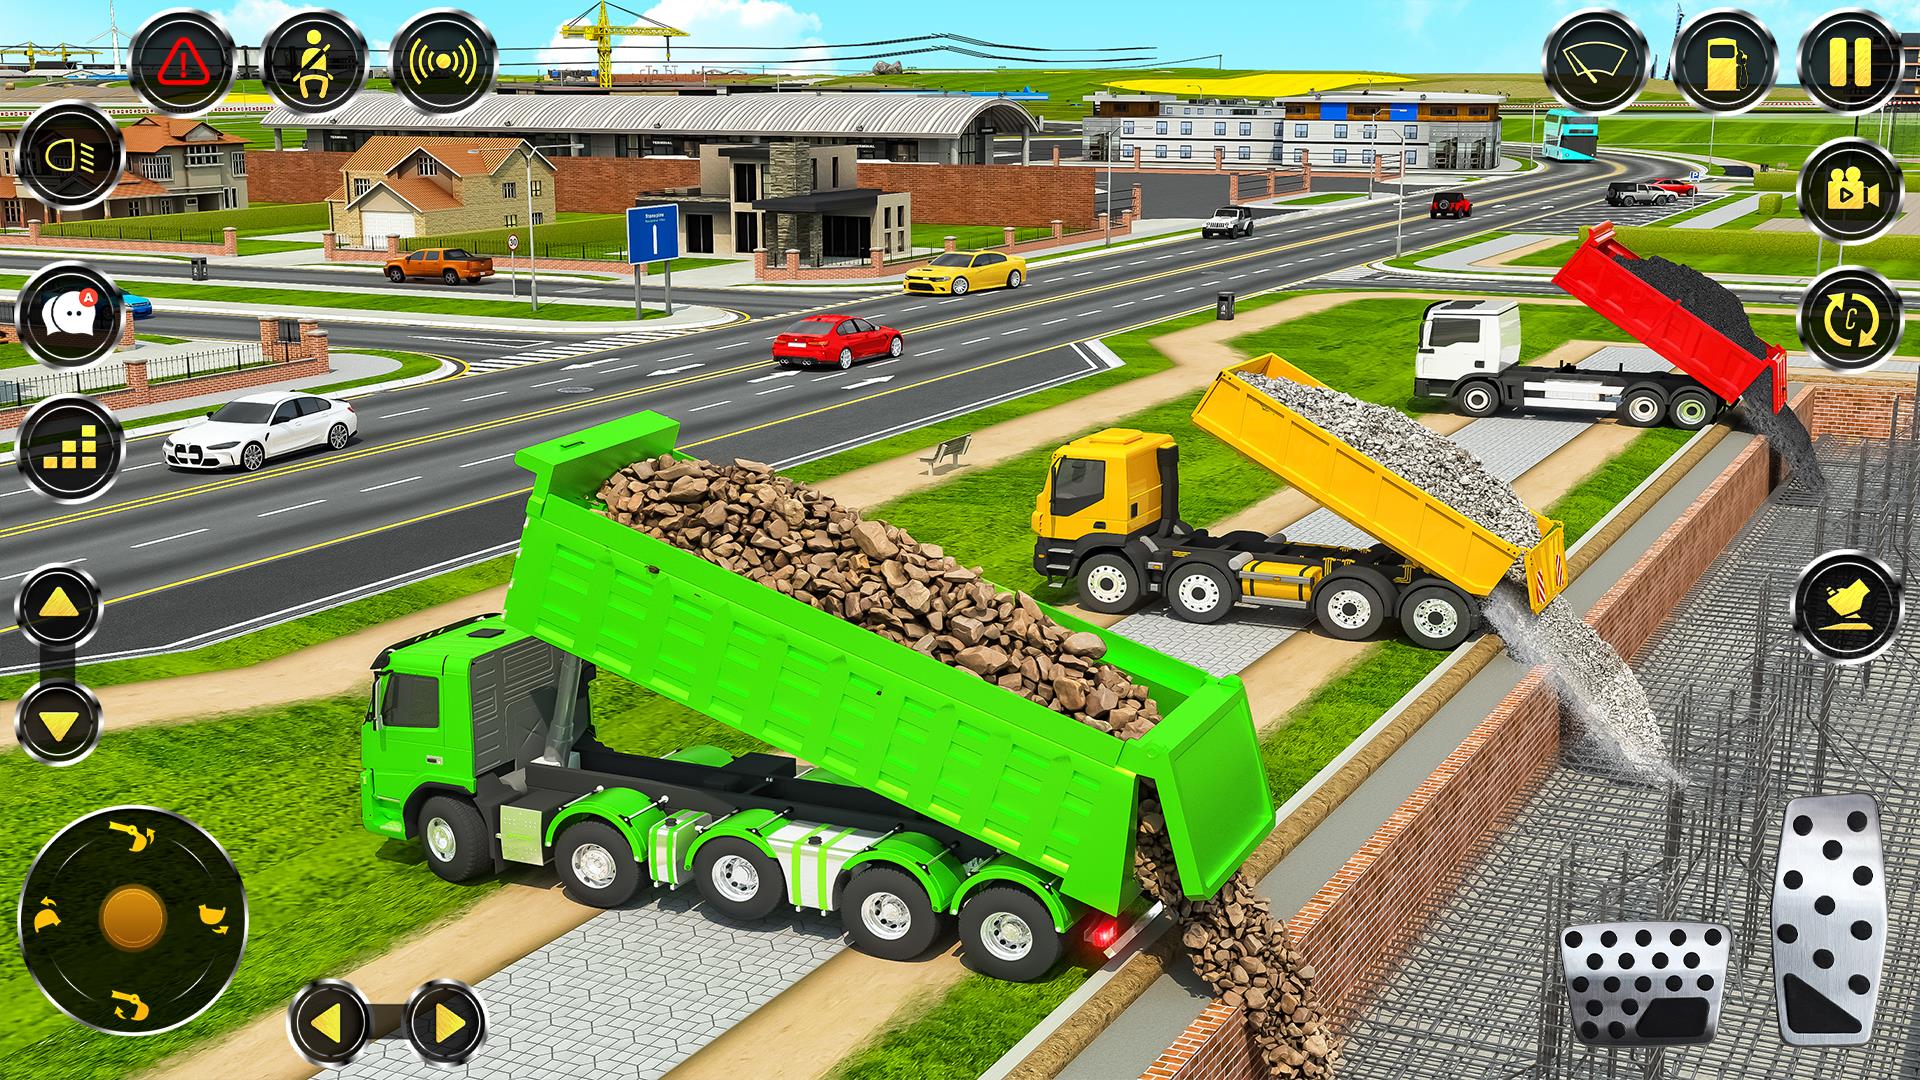 City Construction JCB Game 3D Screenshot 8